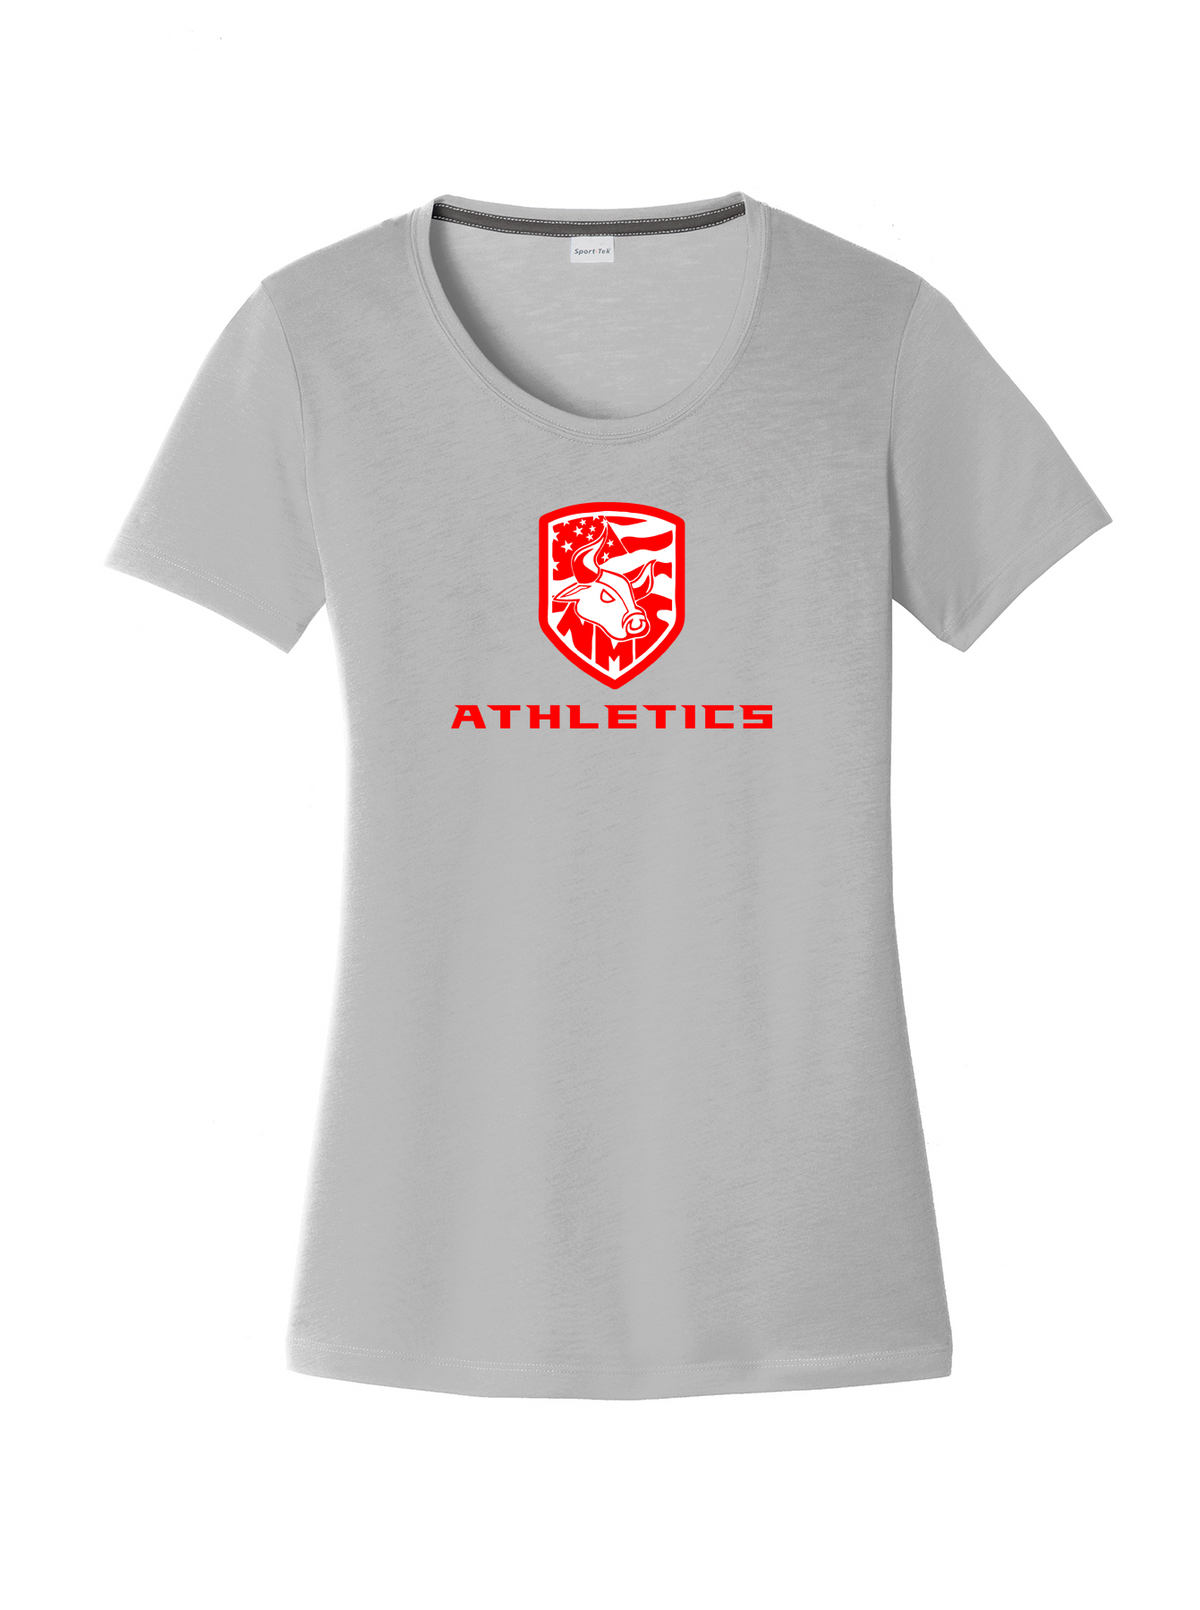 Nesaquake Middle School Athletics Women's Silver CottonTouch Performance T-Shirt